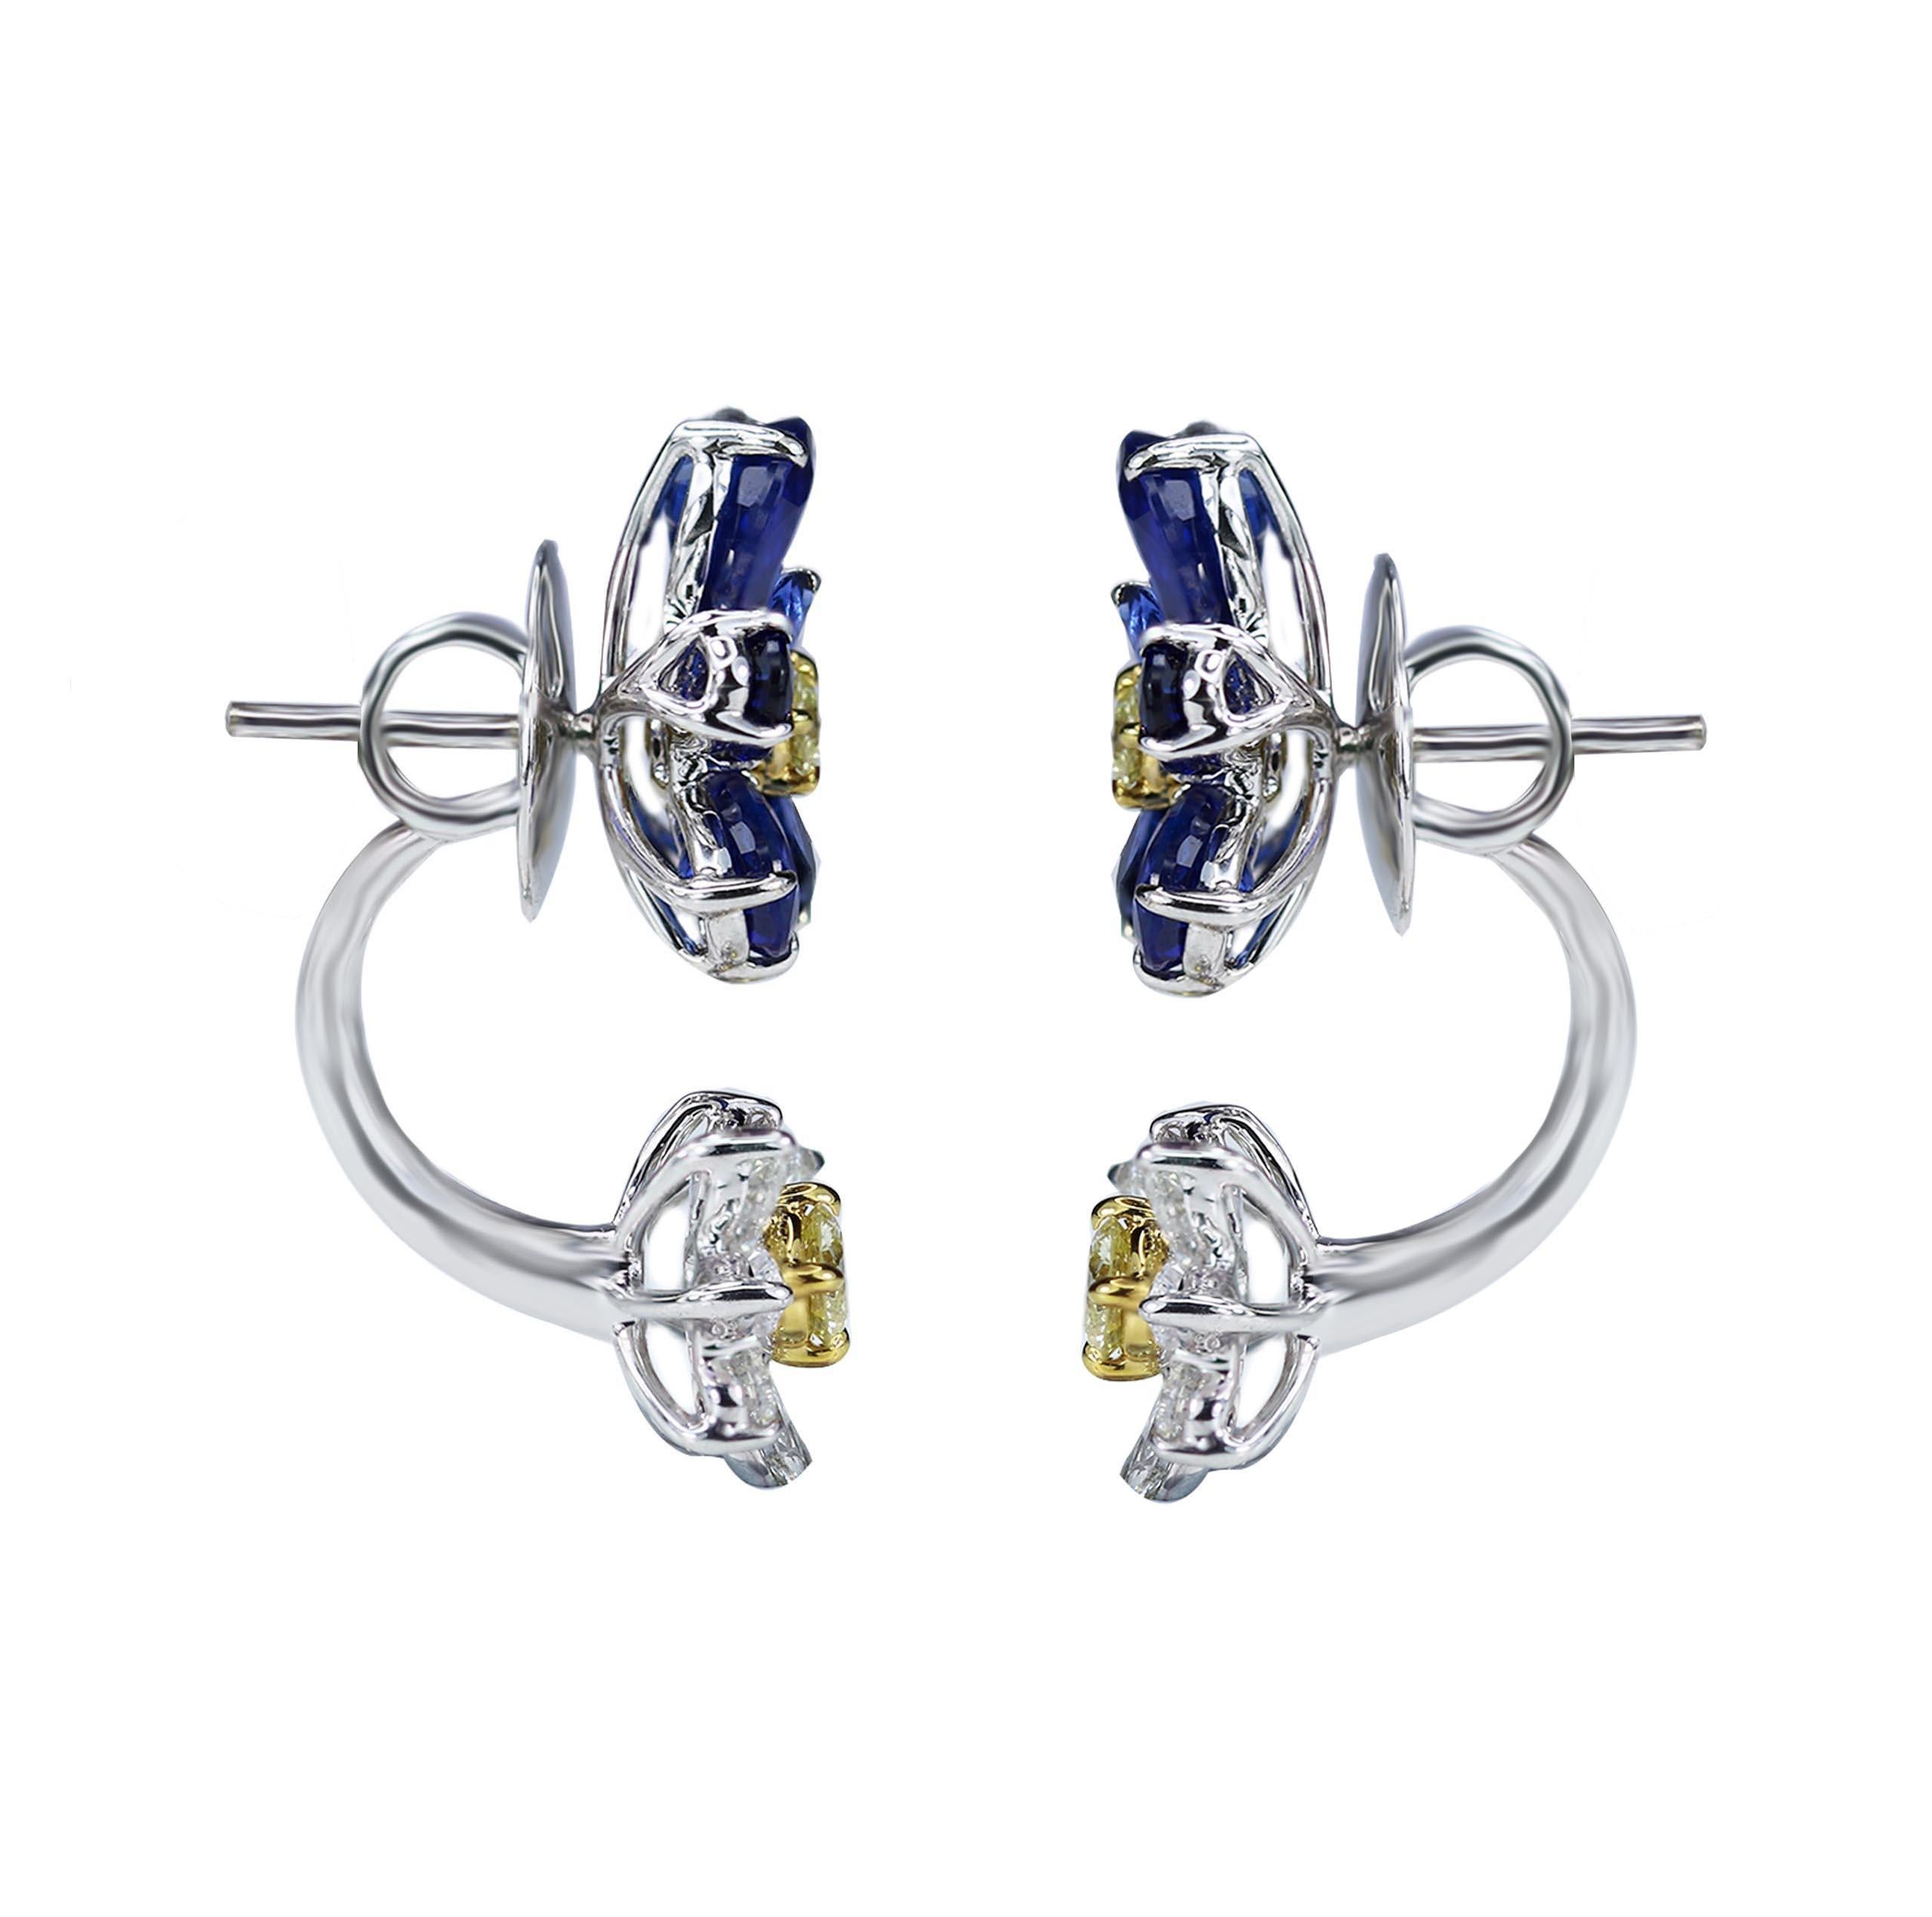 Contemporary Studio Rêves 18 Karat Gold, Sapphires and Diamond Earrings